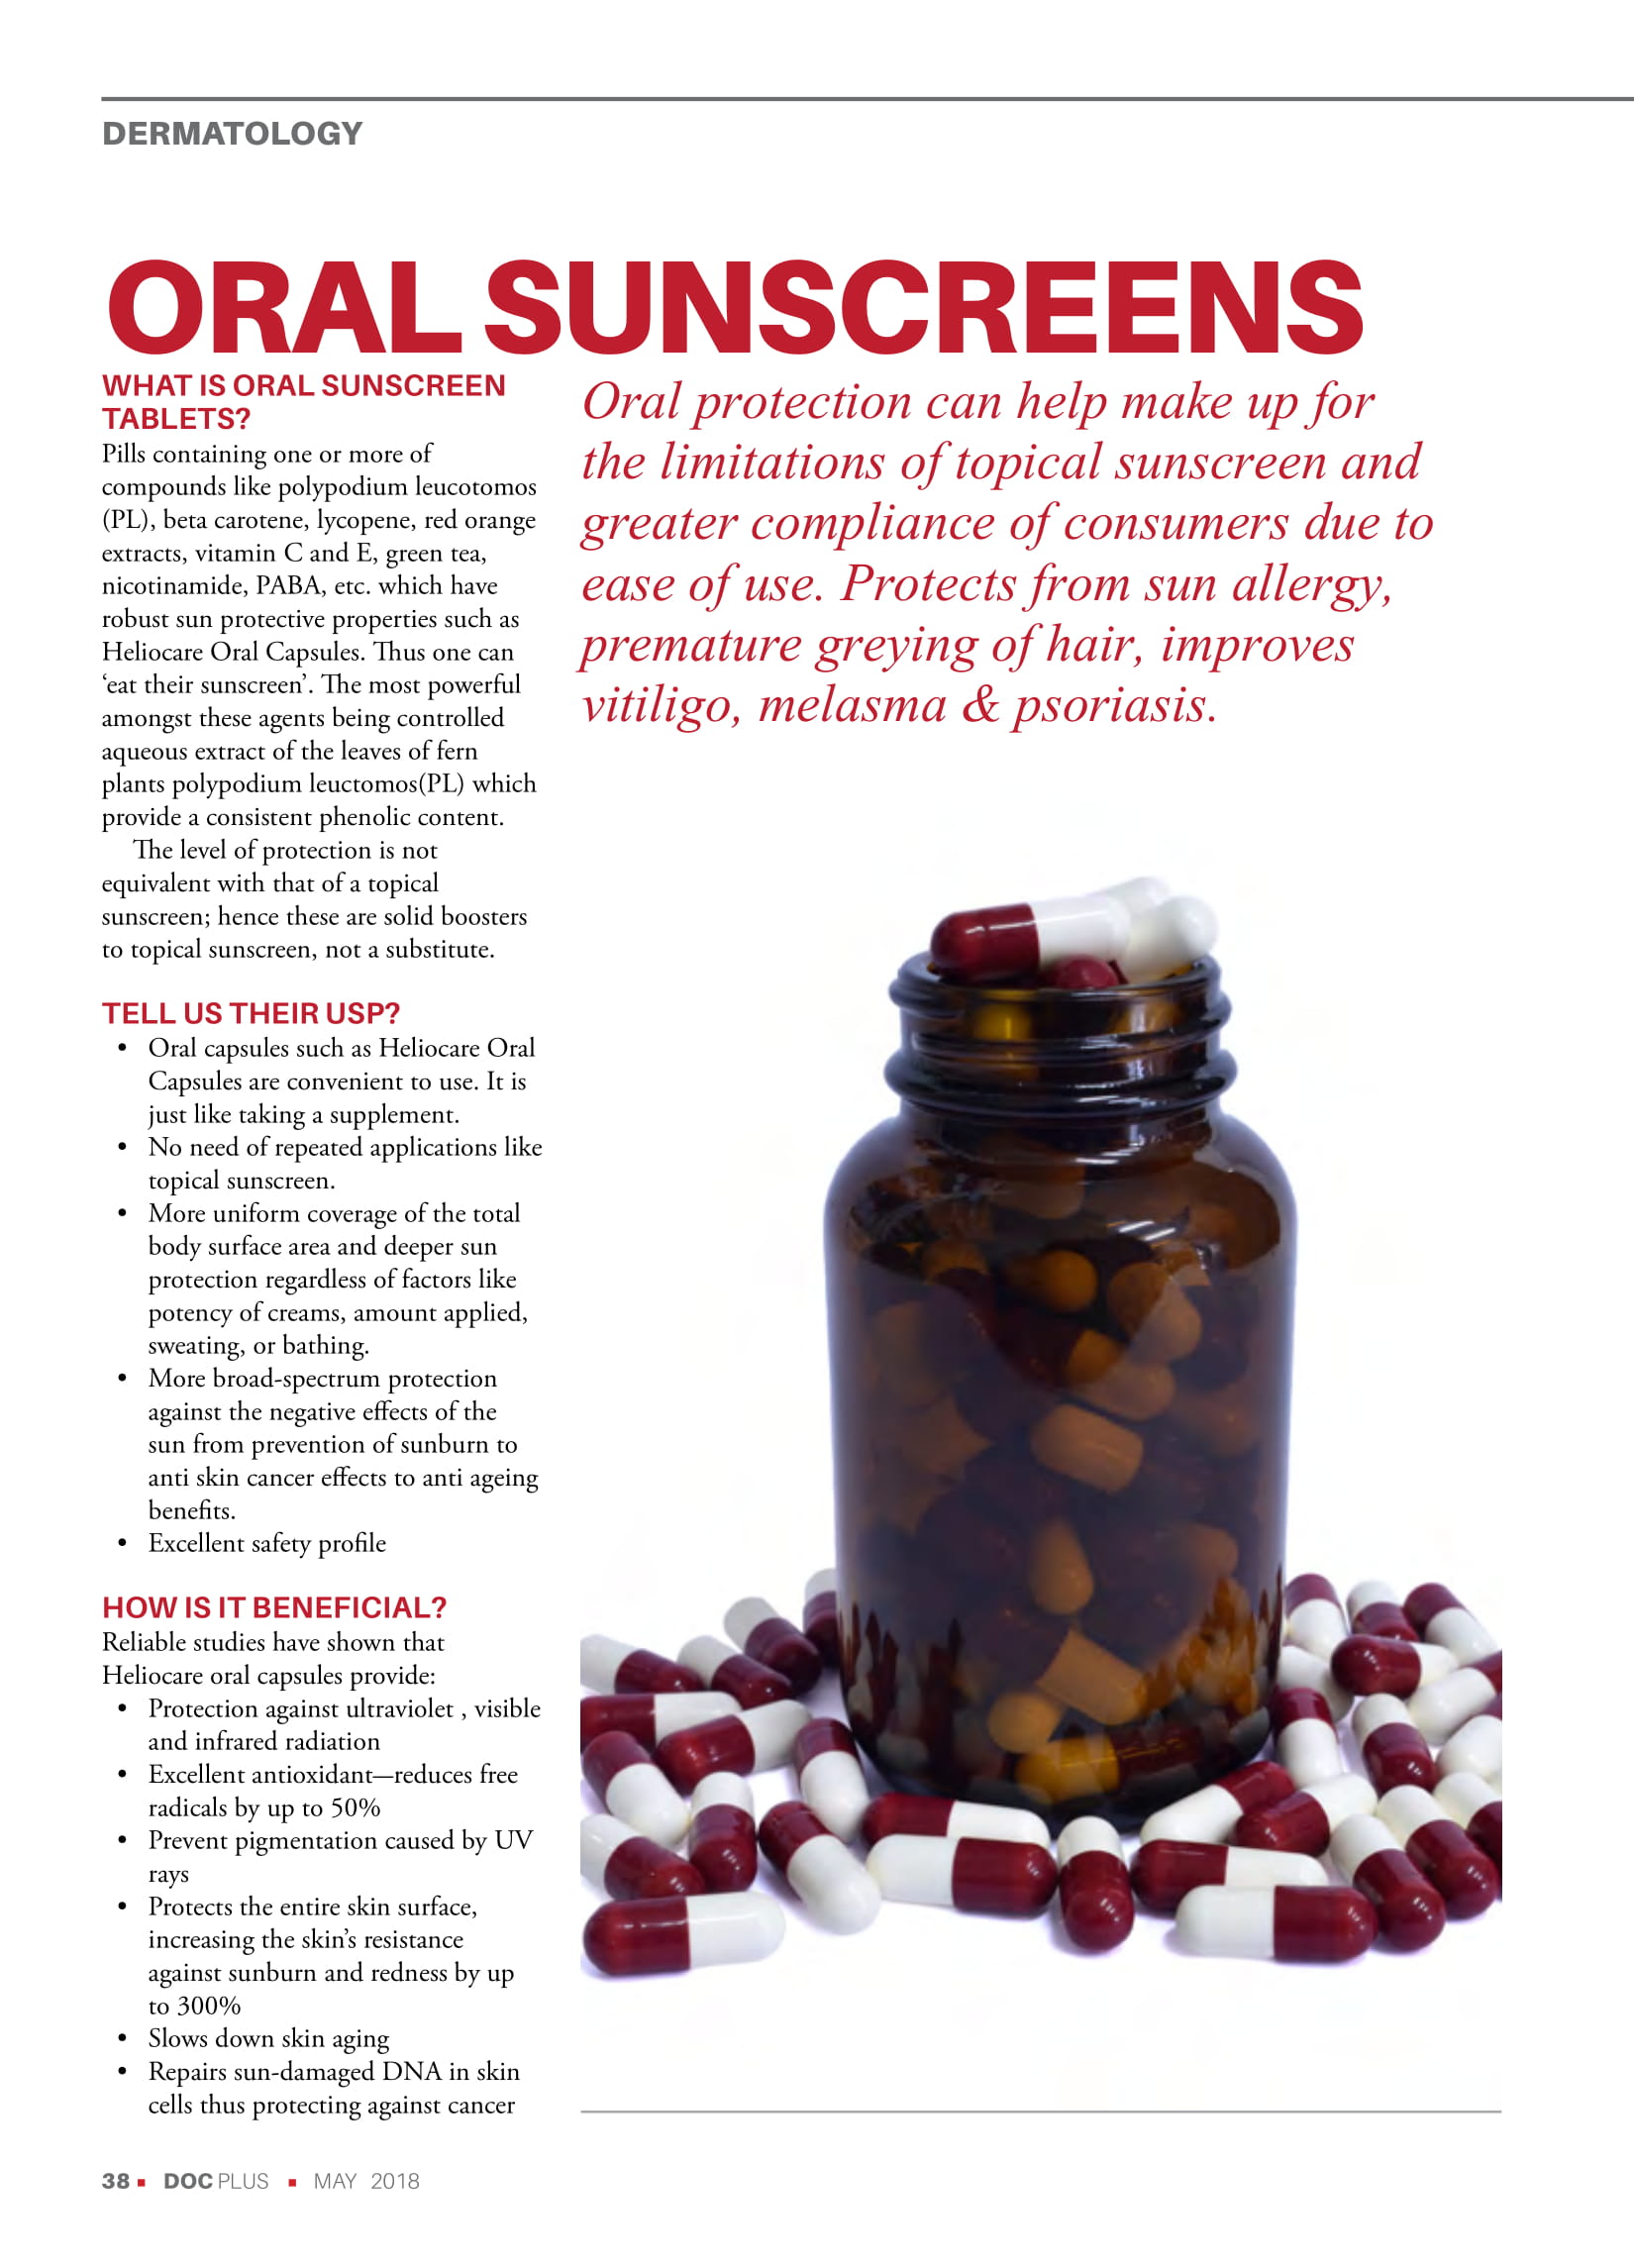 Oral Sunscreens